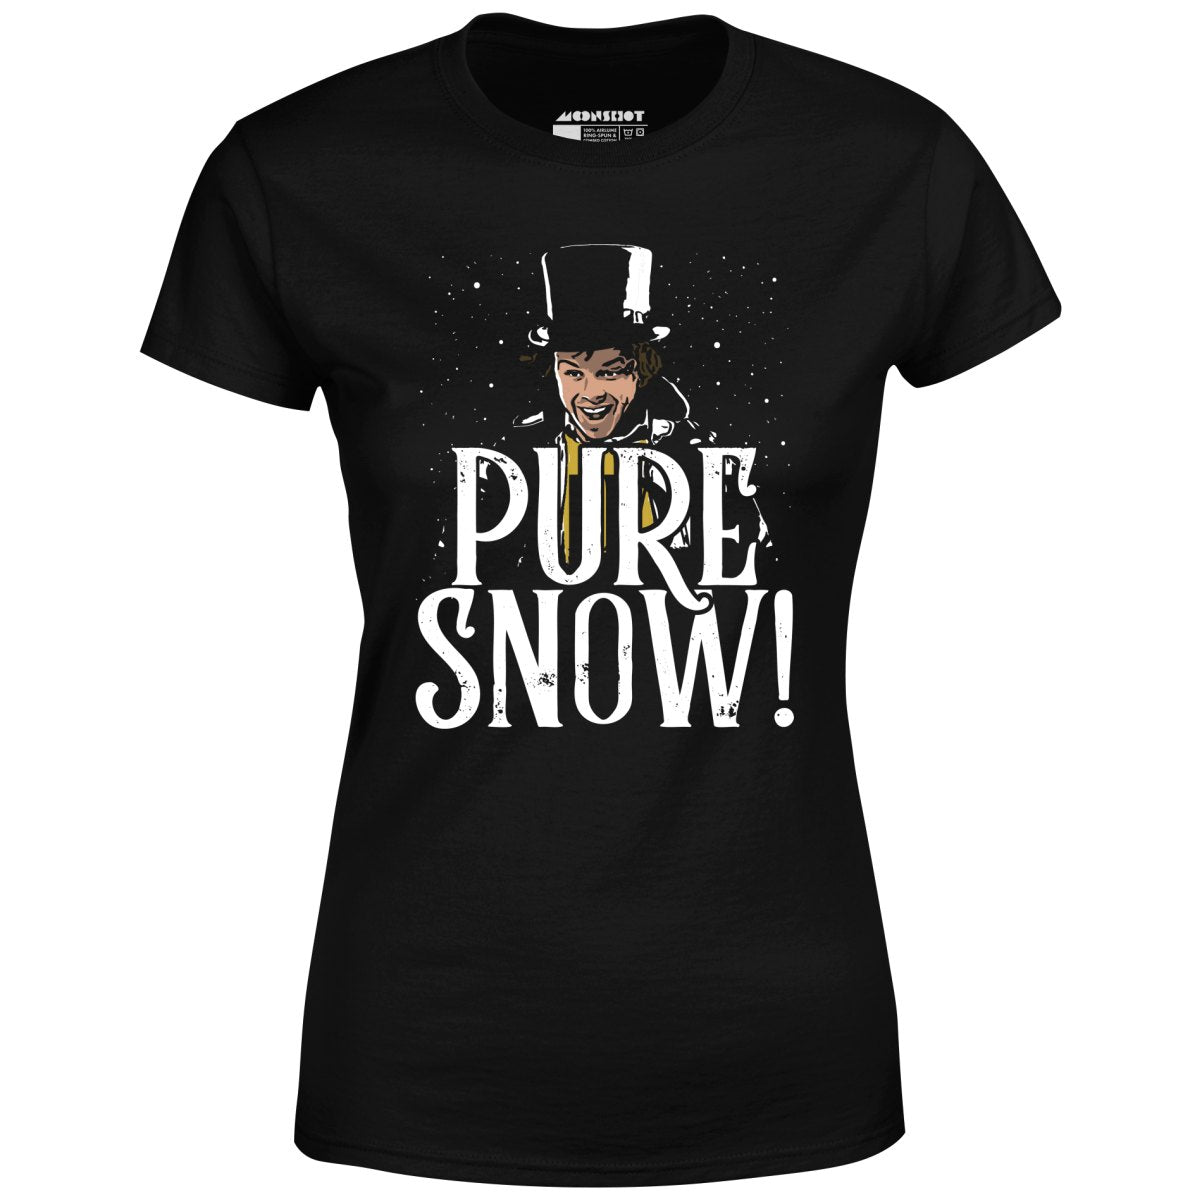 Charles DeMar - Pure Snow! - Women's T-Shirt